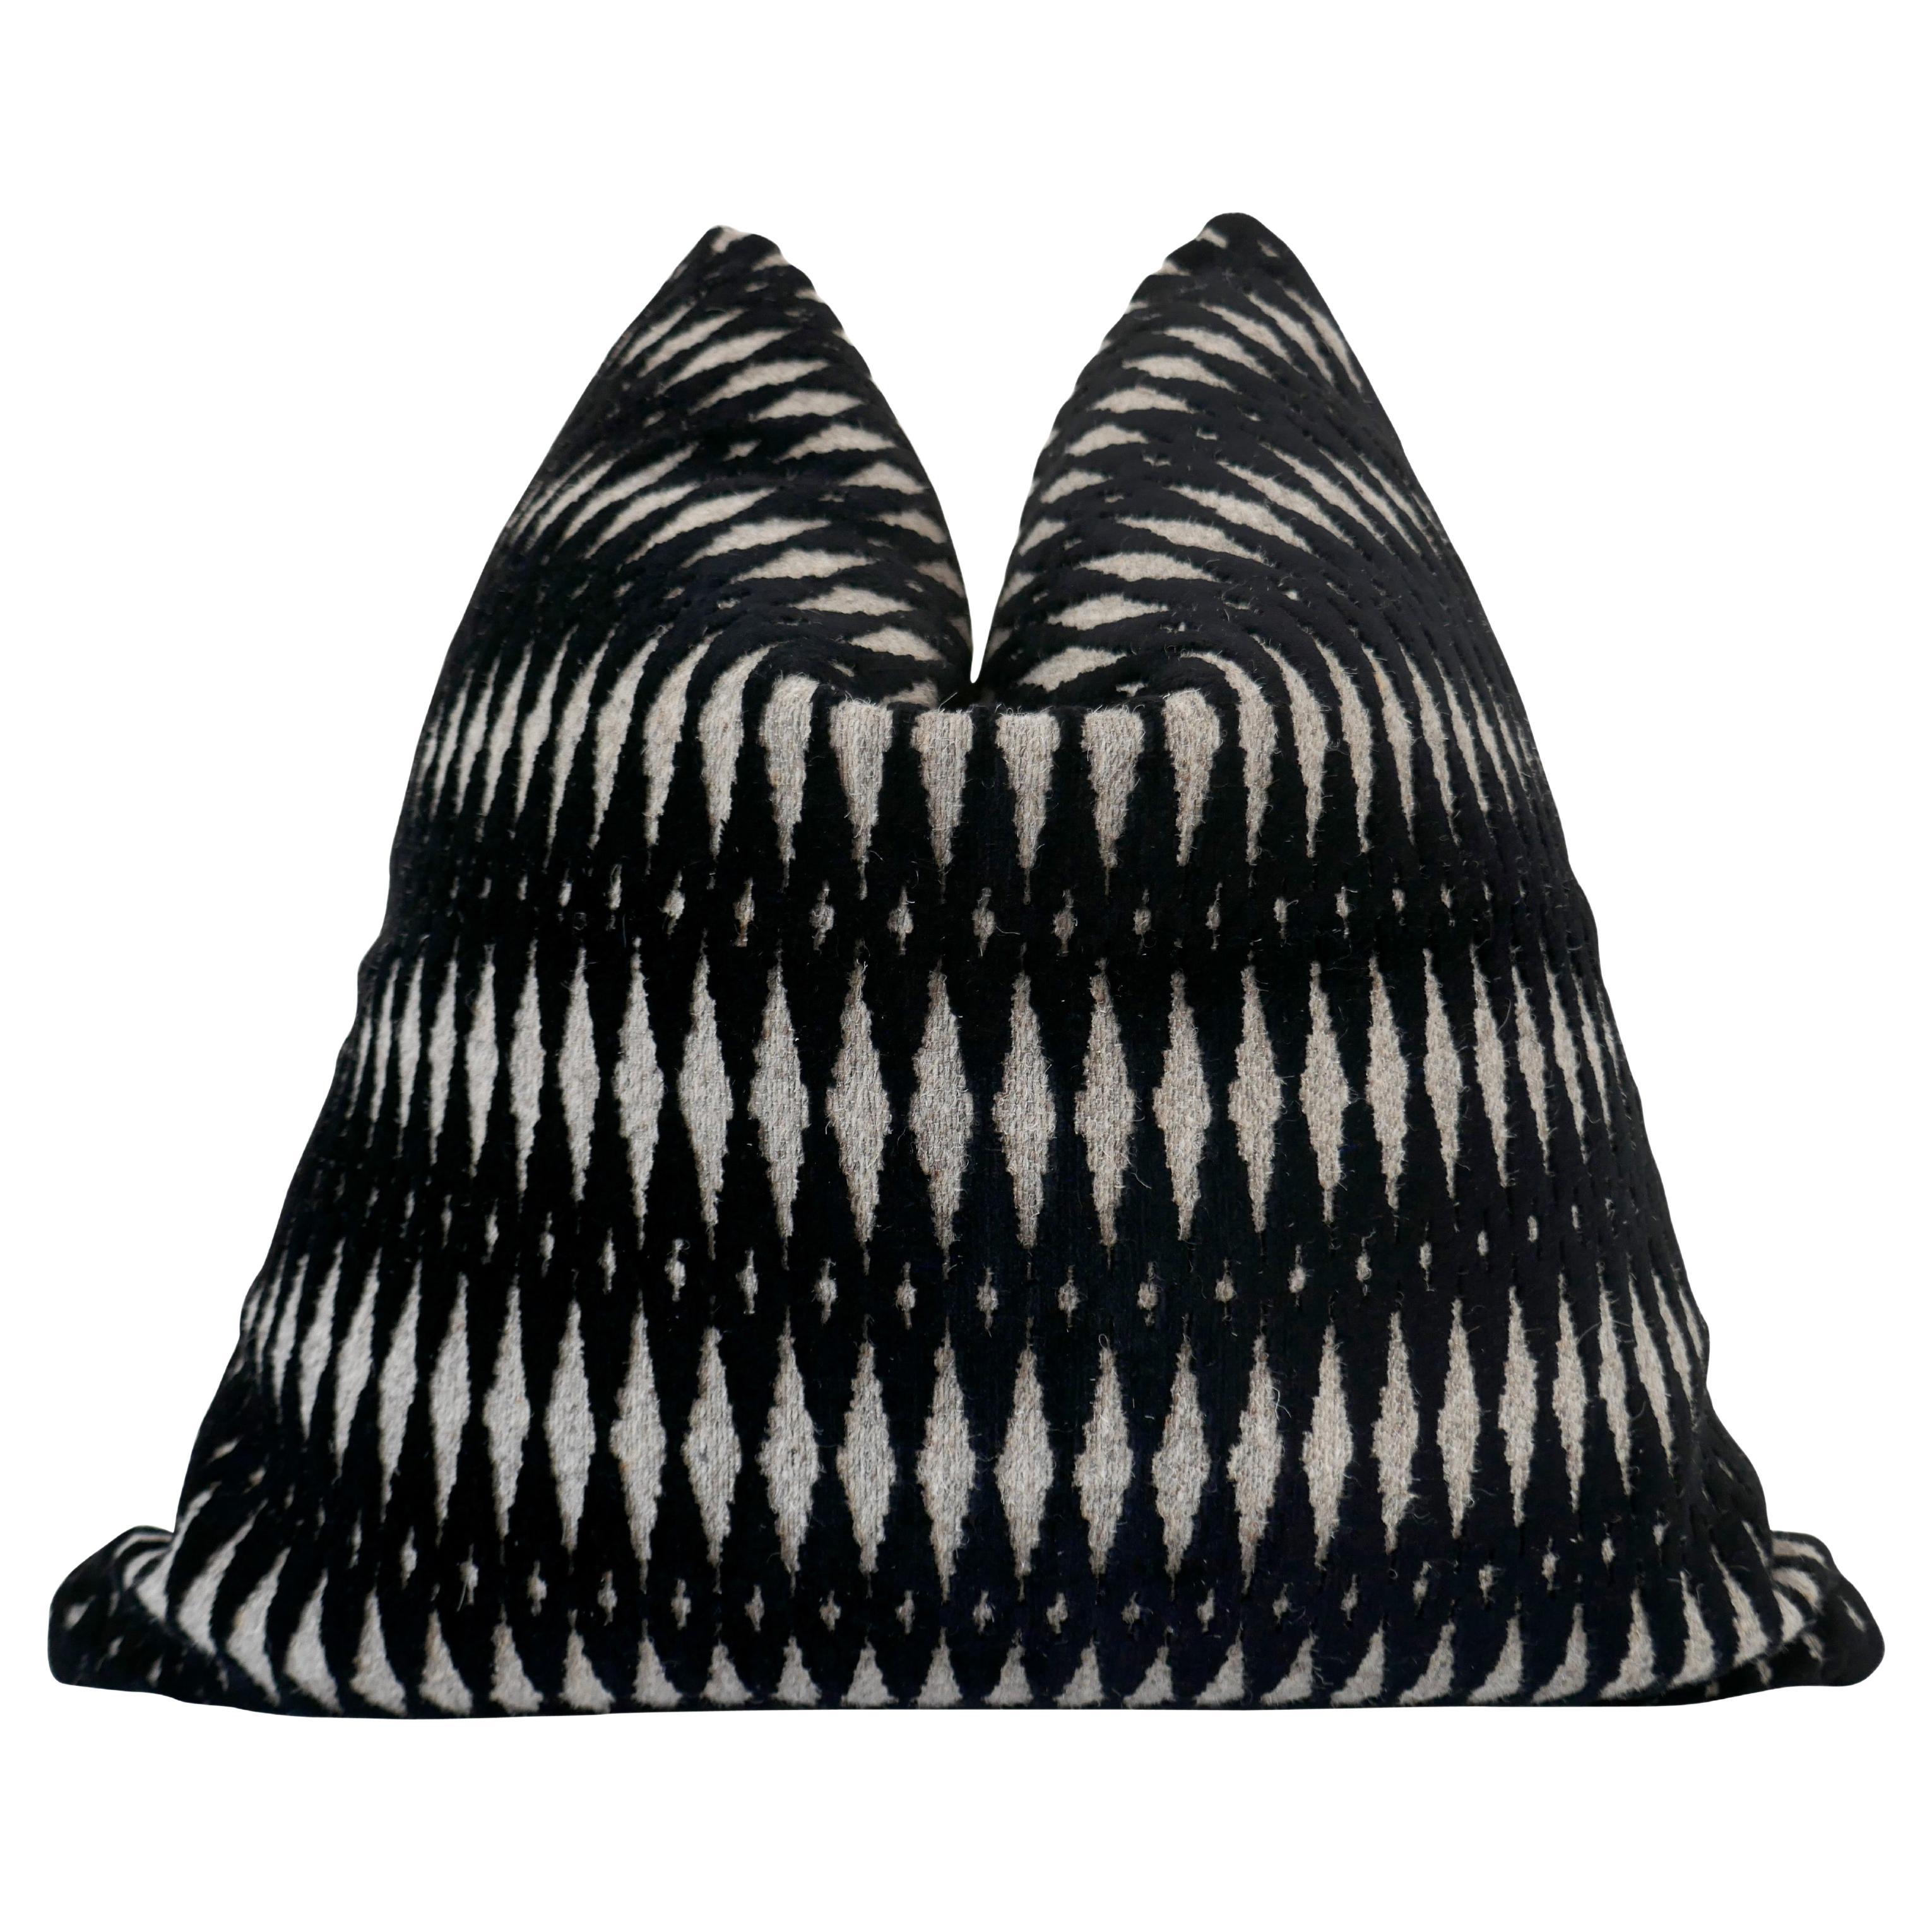 Fragments Identity Belgium Loomed Argos Black Wool Cut Velvet Geometric Pillow